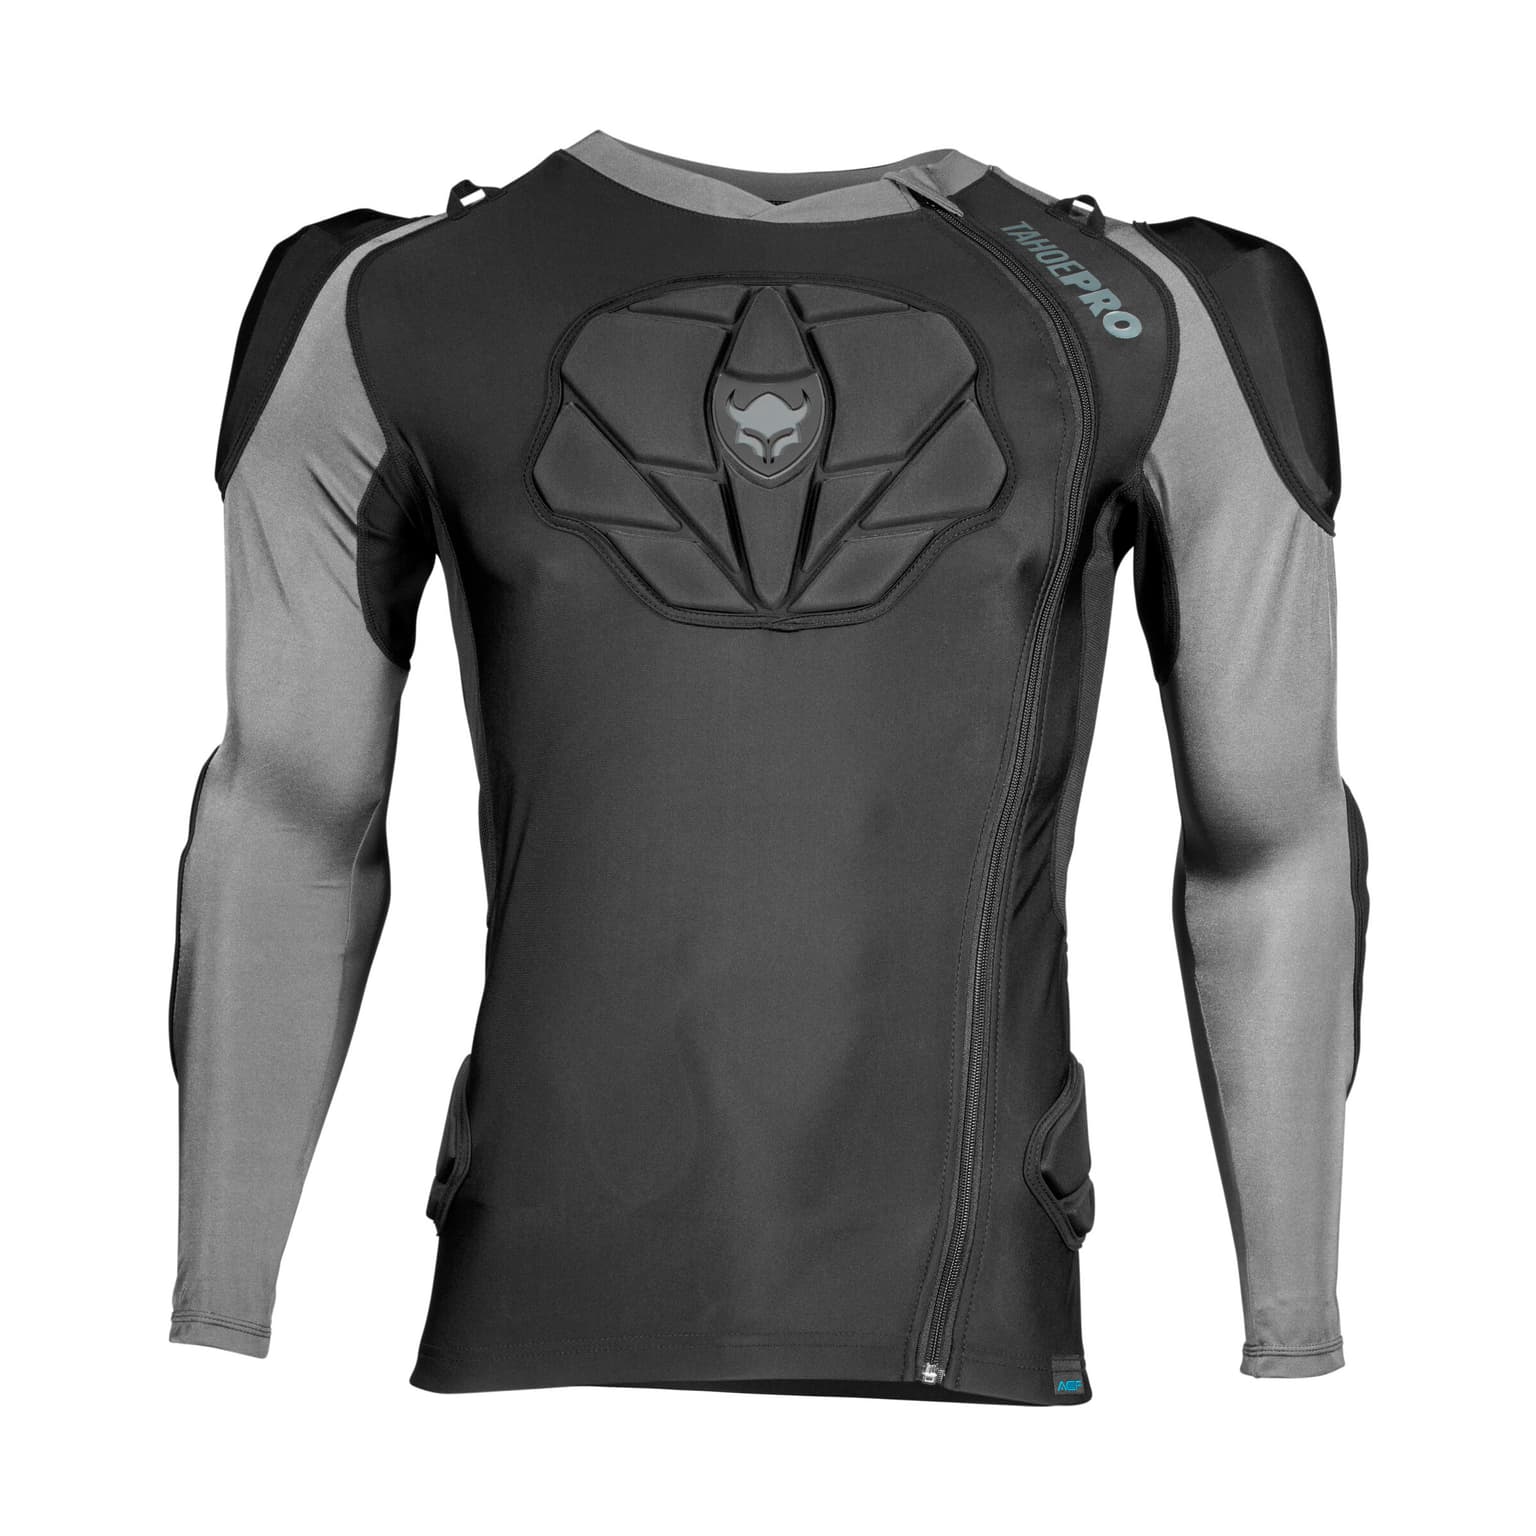 Tsg Tsg Protective Shirt LS Tahoe Pro A 2.0 Protections noir 1